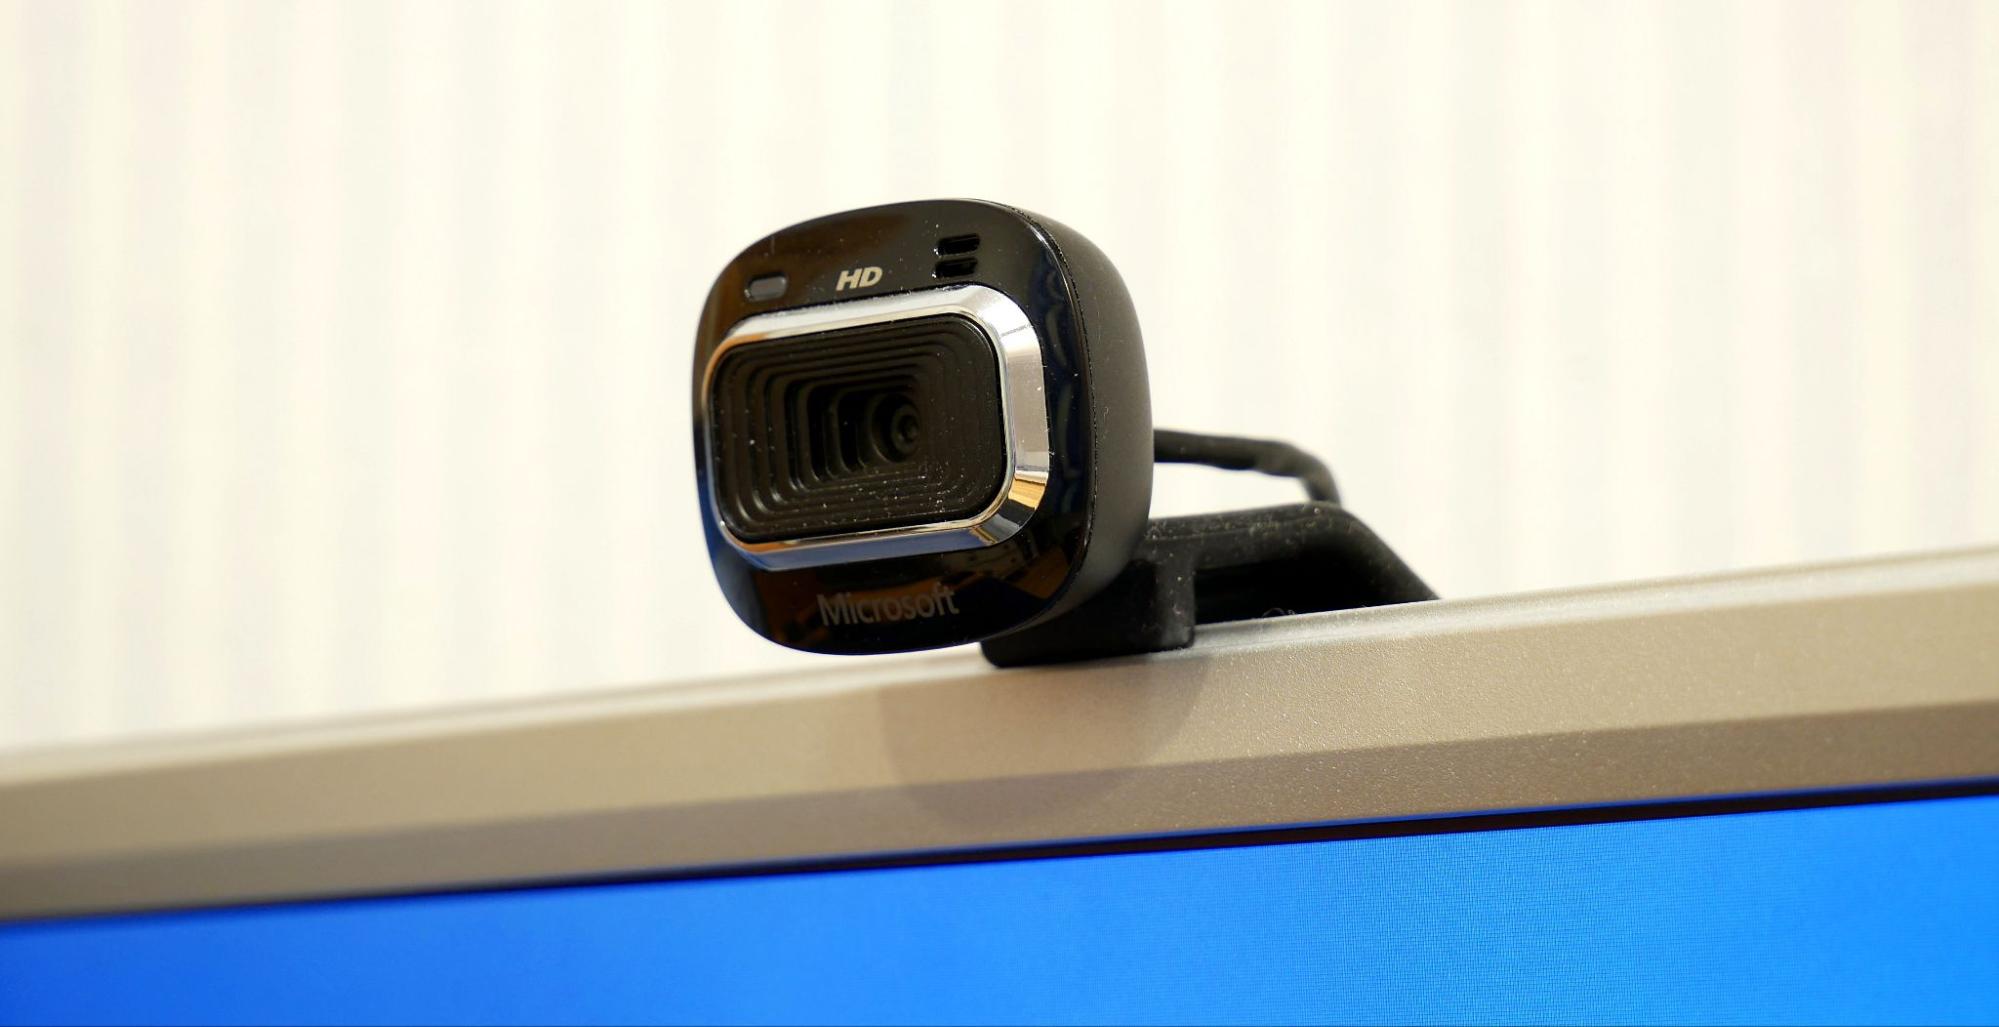 Display-mounted webcam.